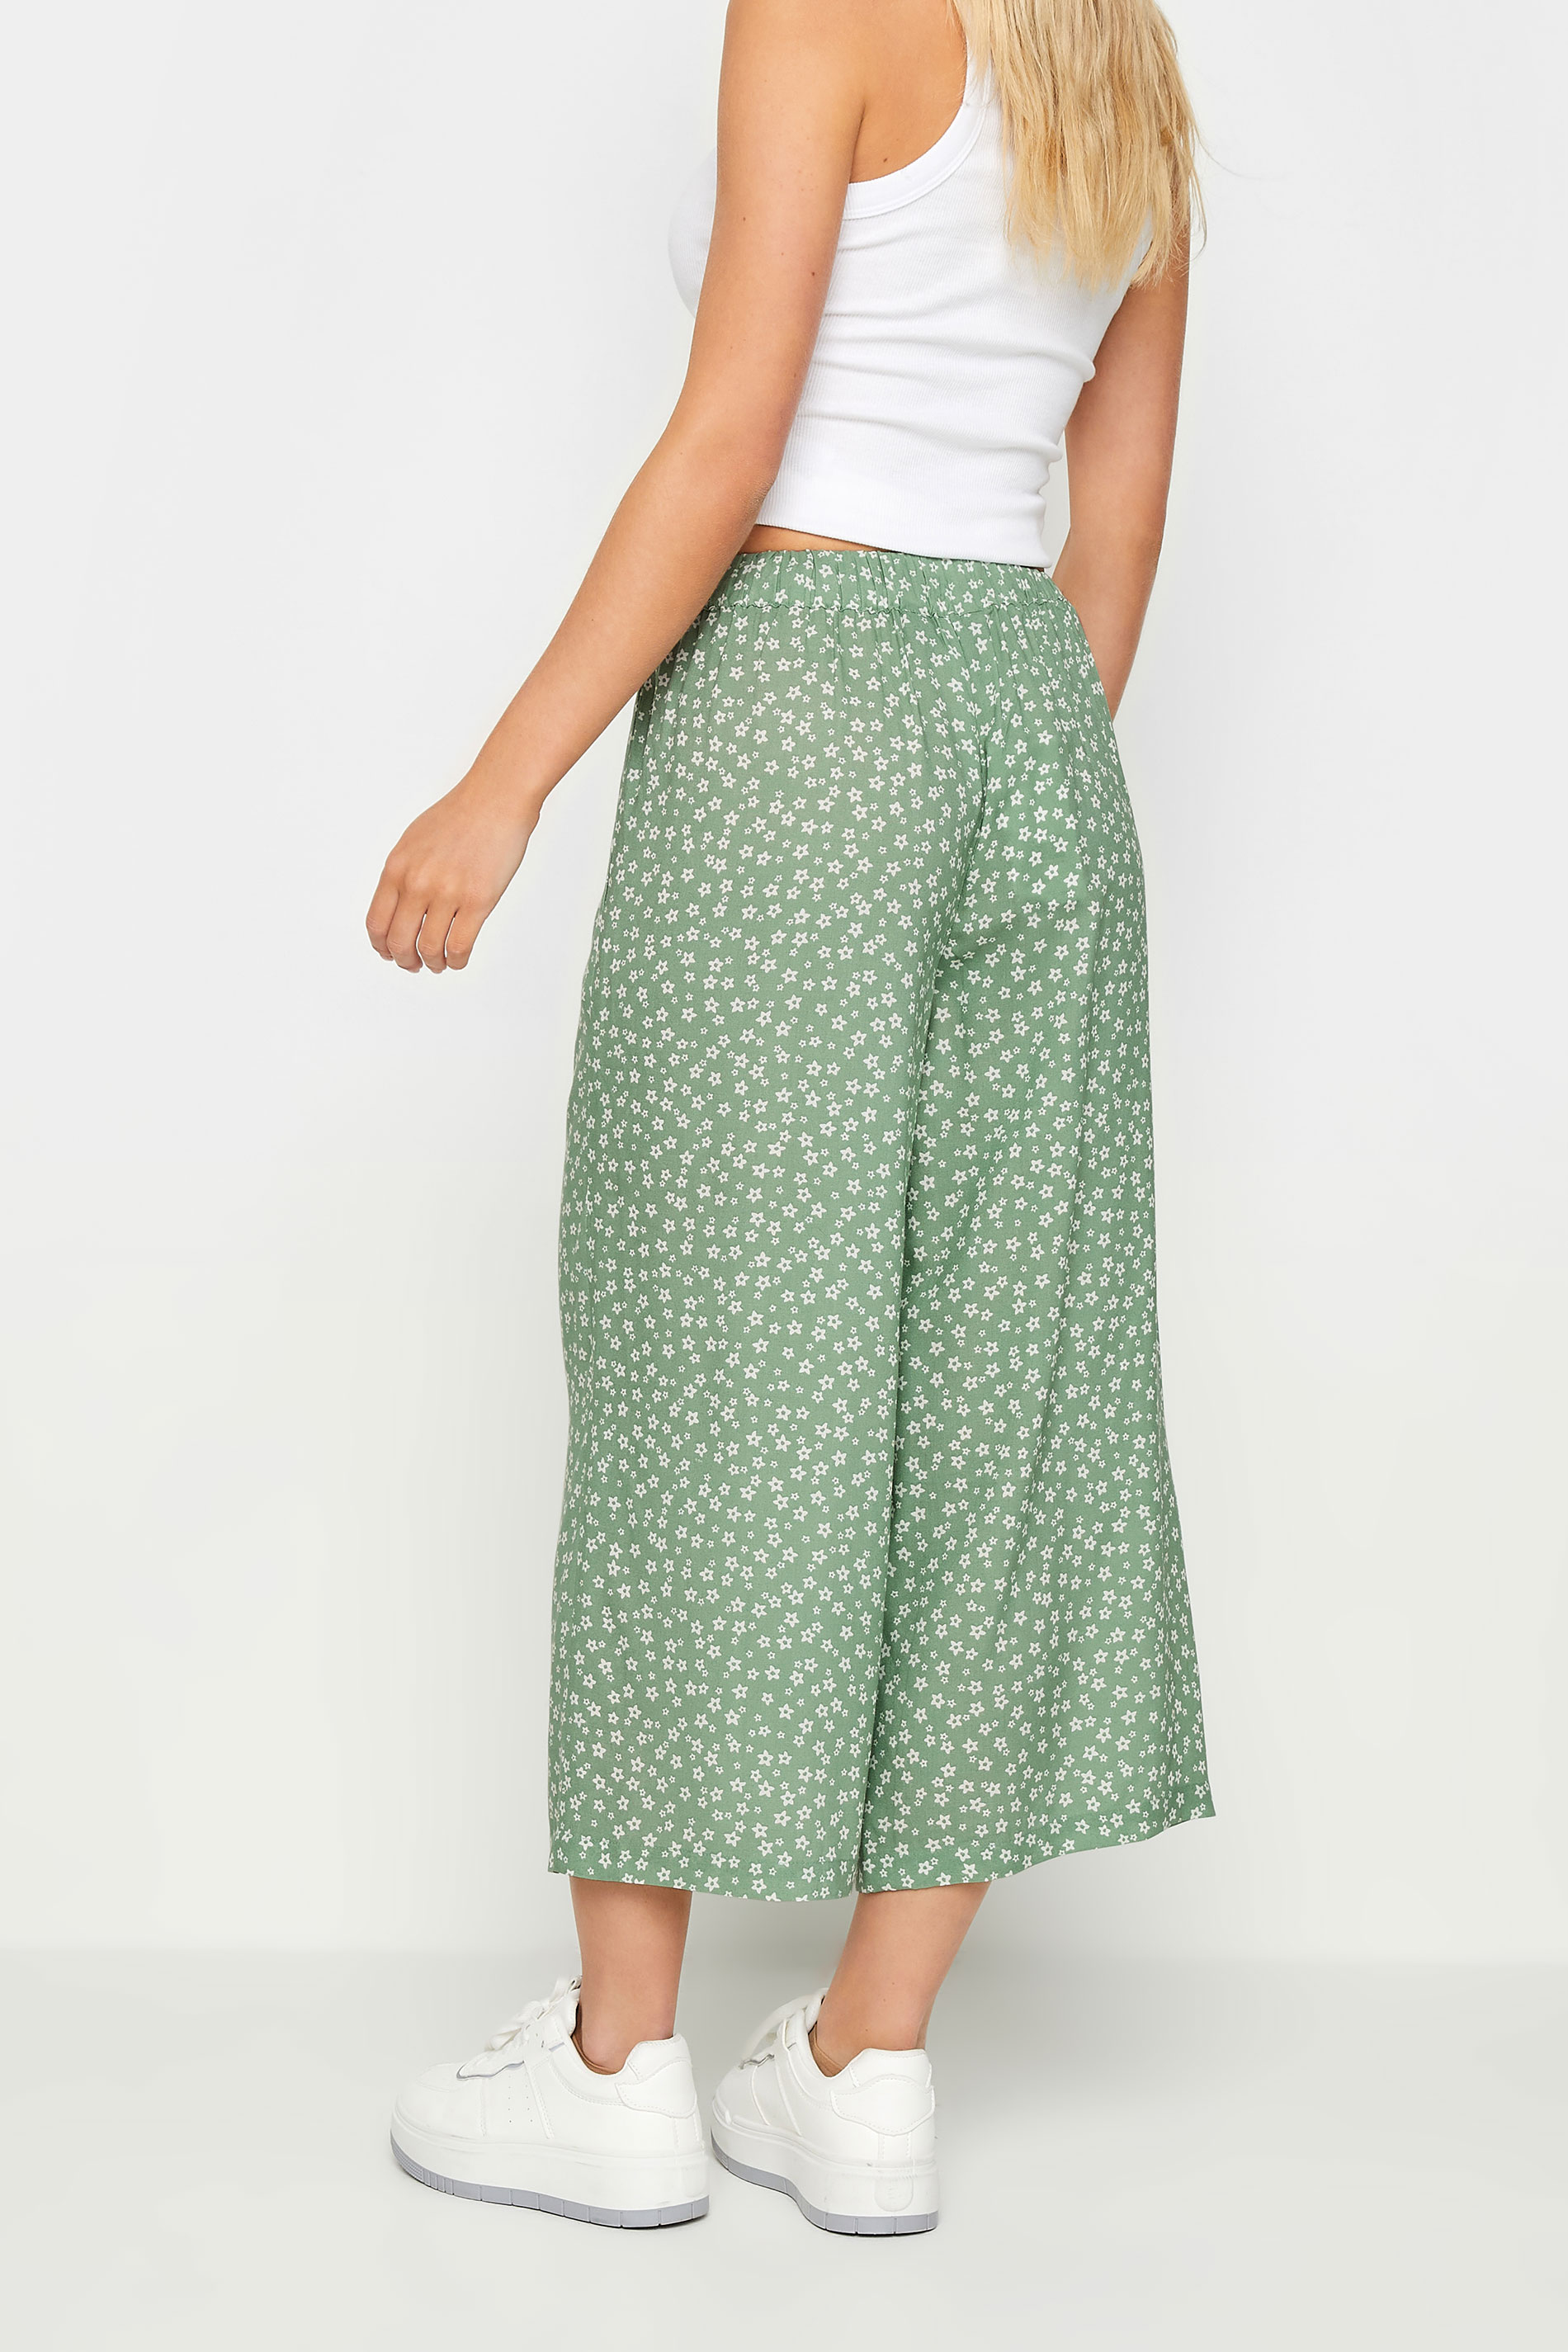 PixieGirl Petite Women's Sage Green Ditsy Floral Print Cropped Trousers | PixieGirl 3